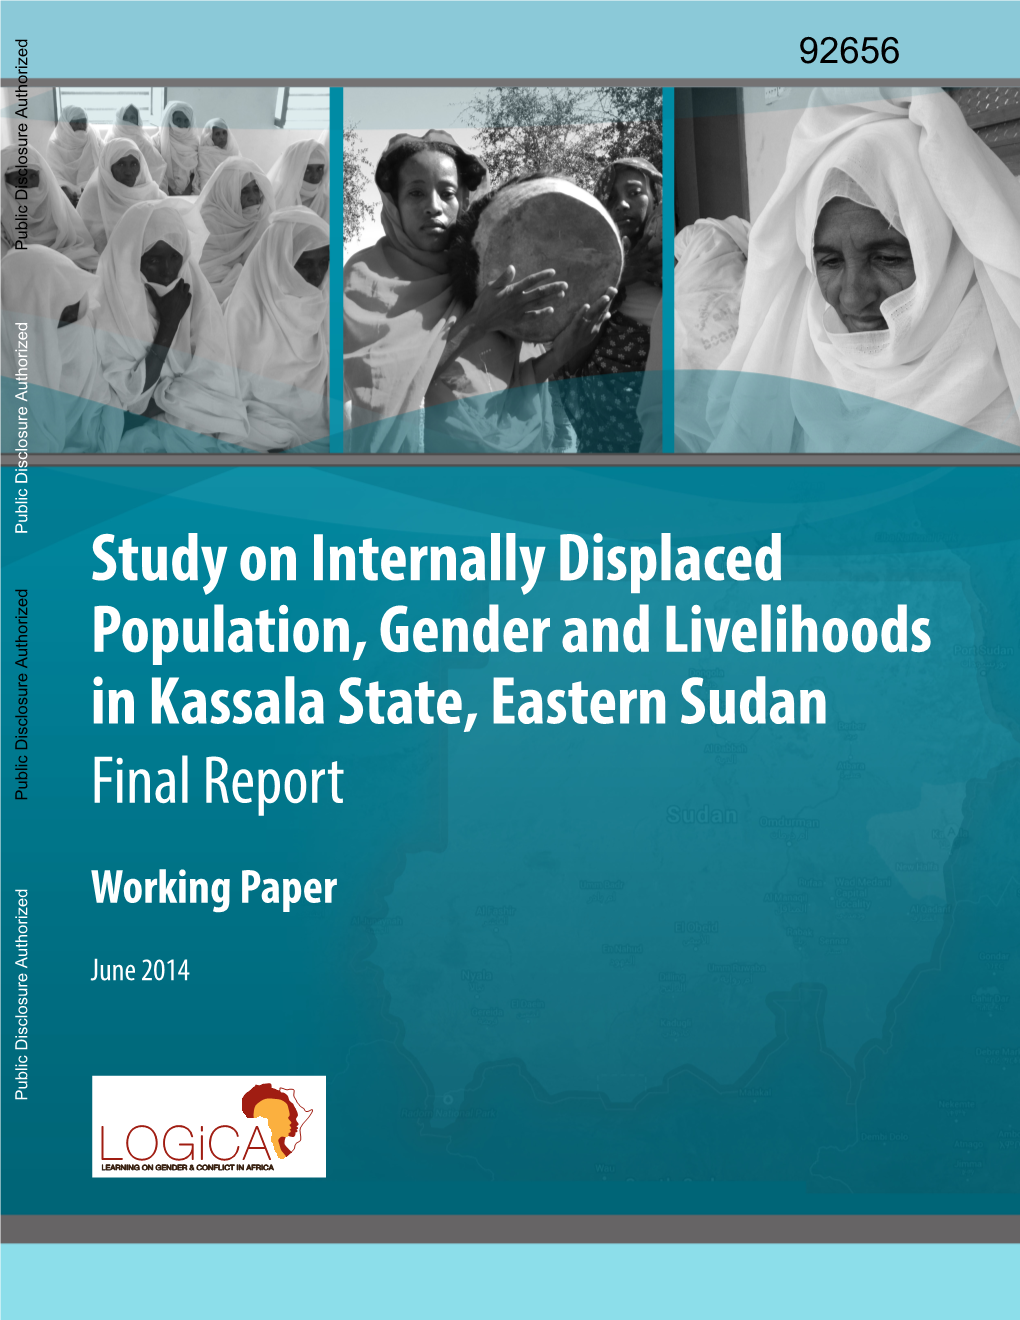 Study on Internally Displaced Population, Gender and Livelihoods in Kassala State, Eastern Sudan FINAL REPORT